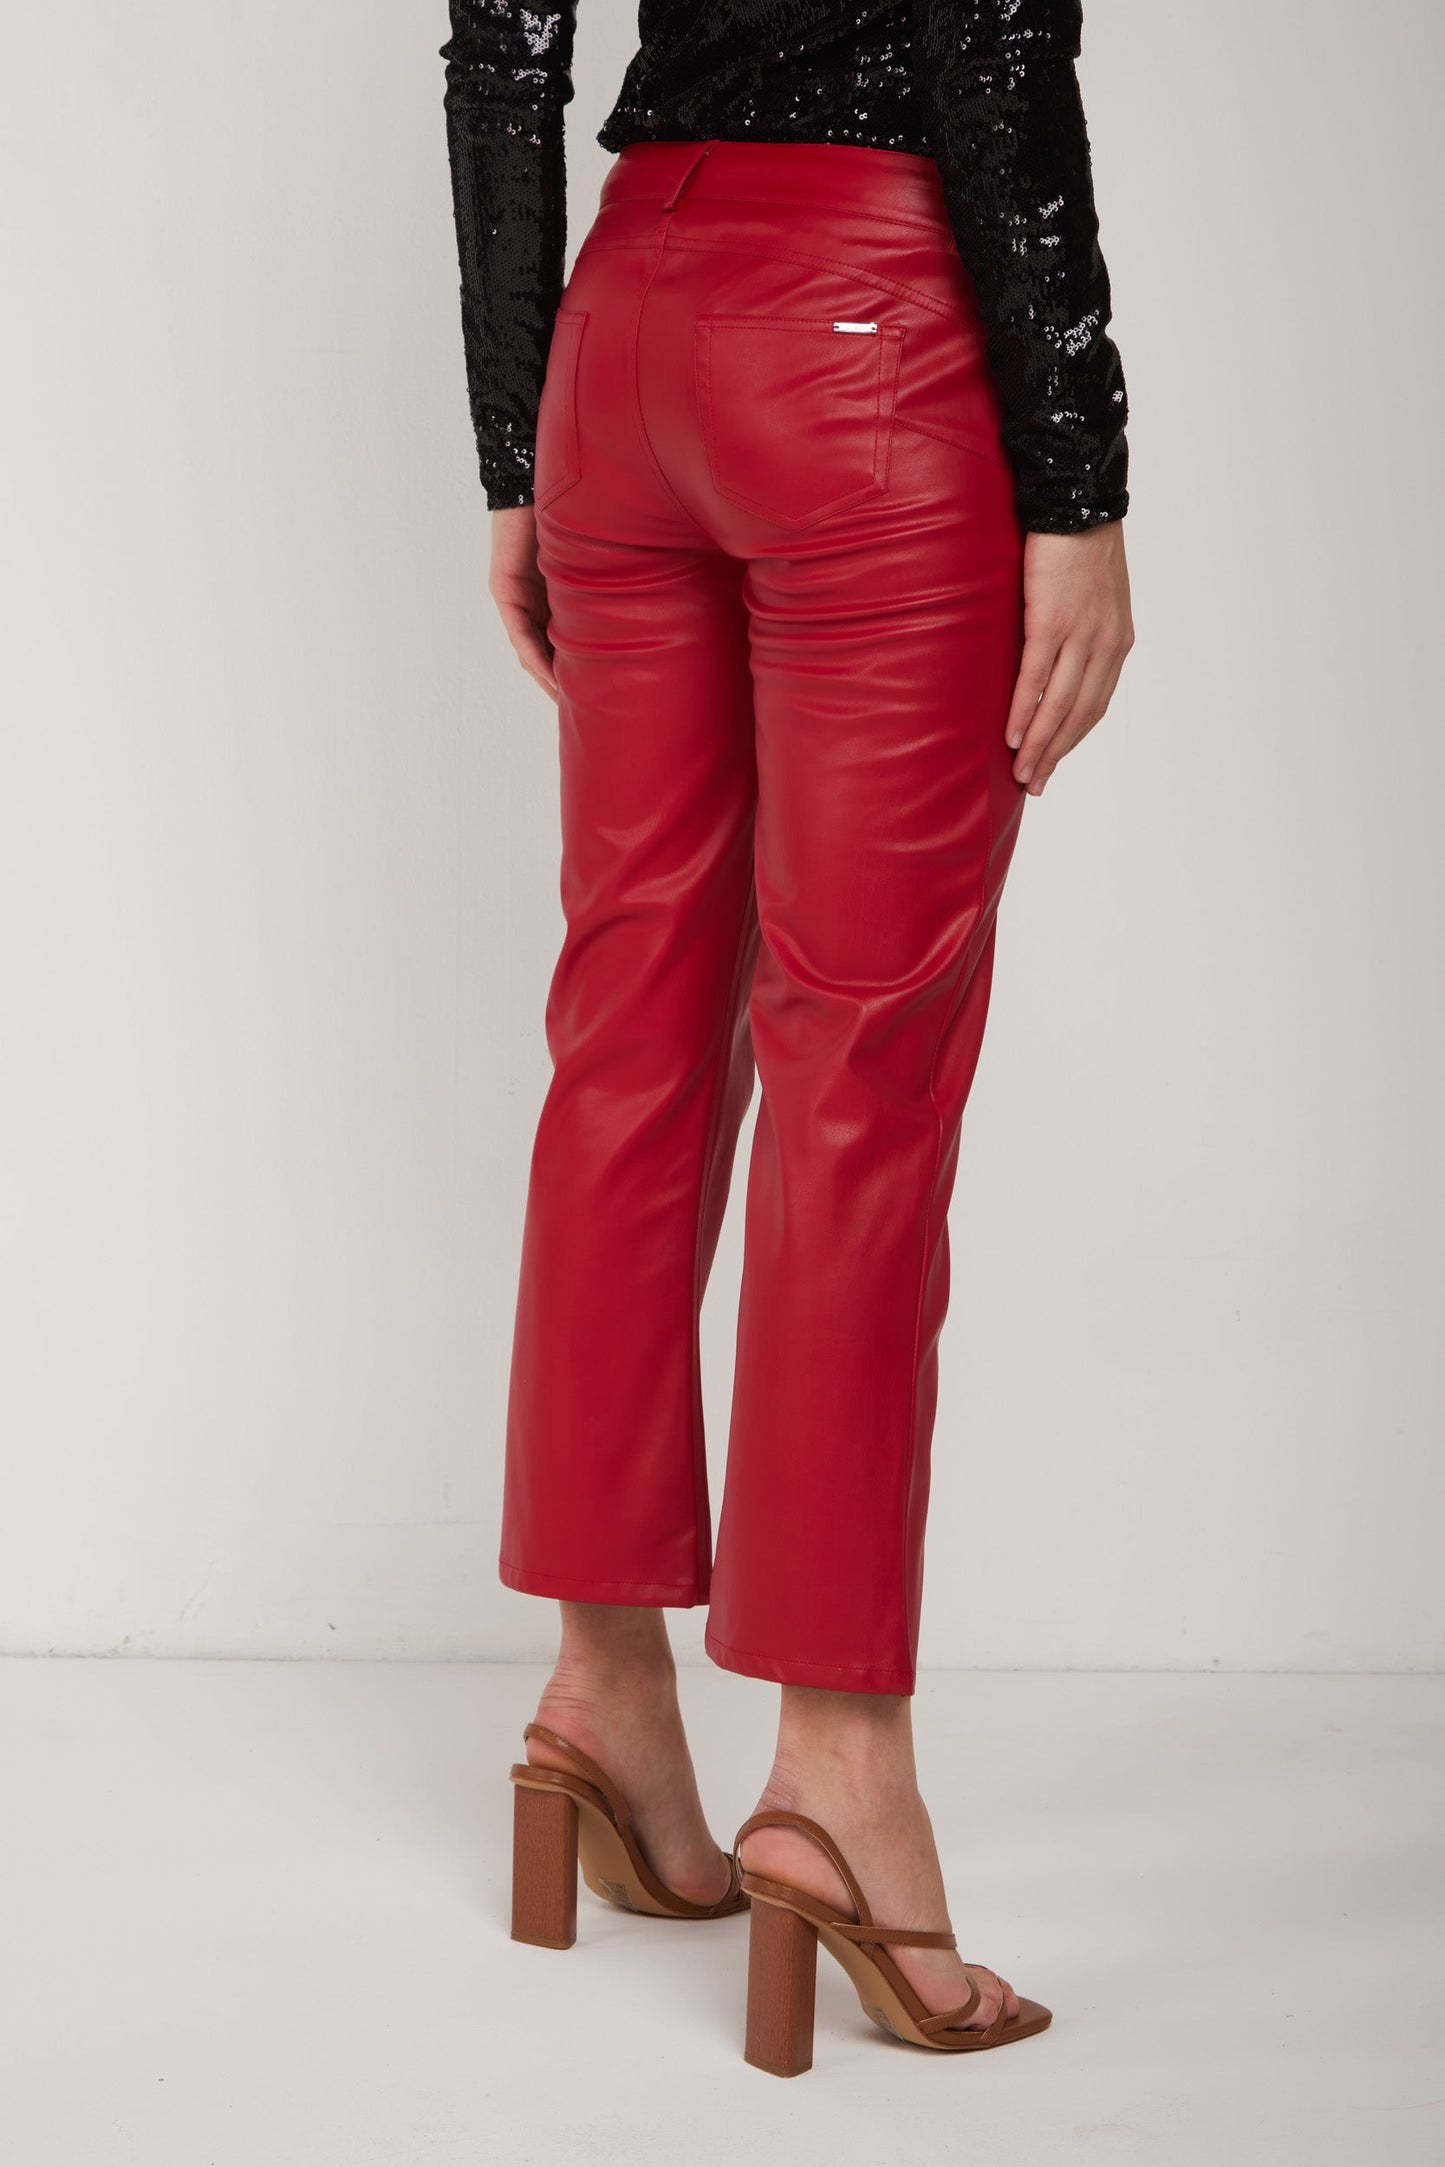 LIU-JO Red Leather Pants